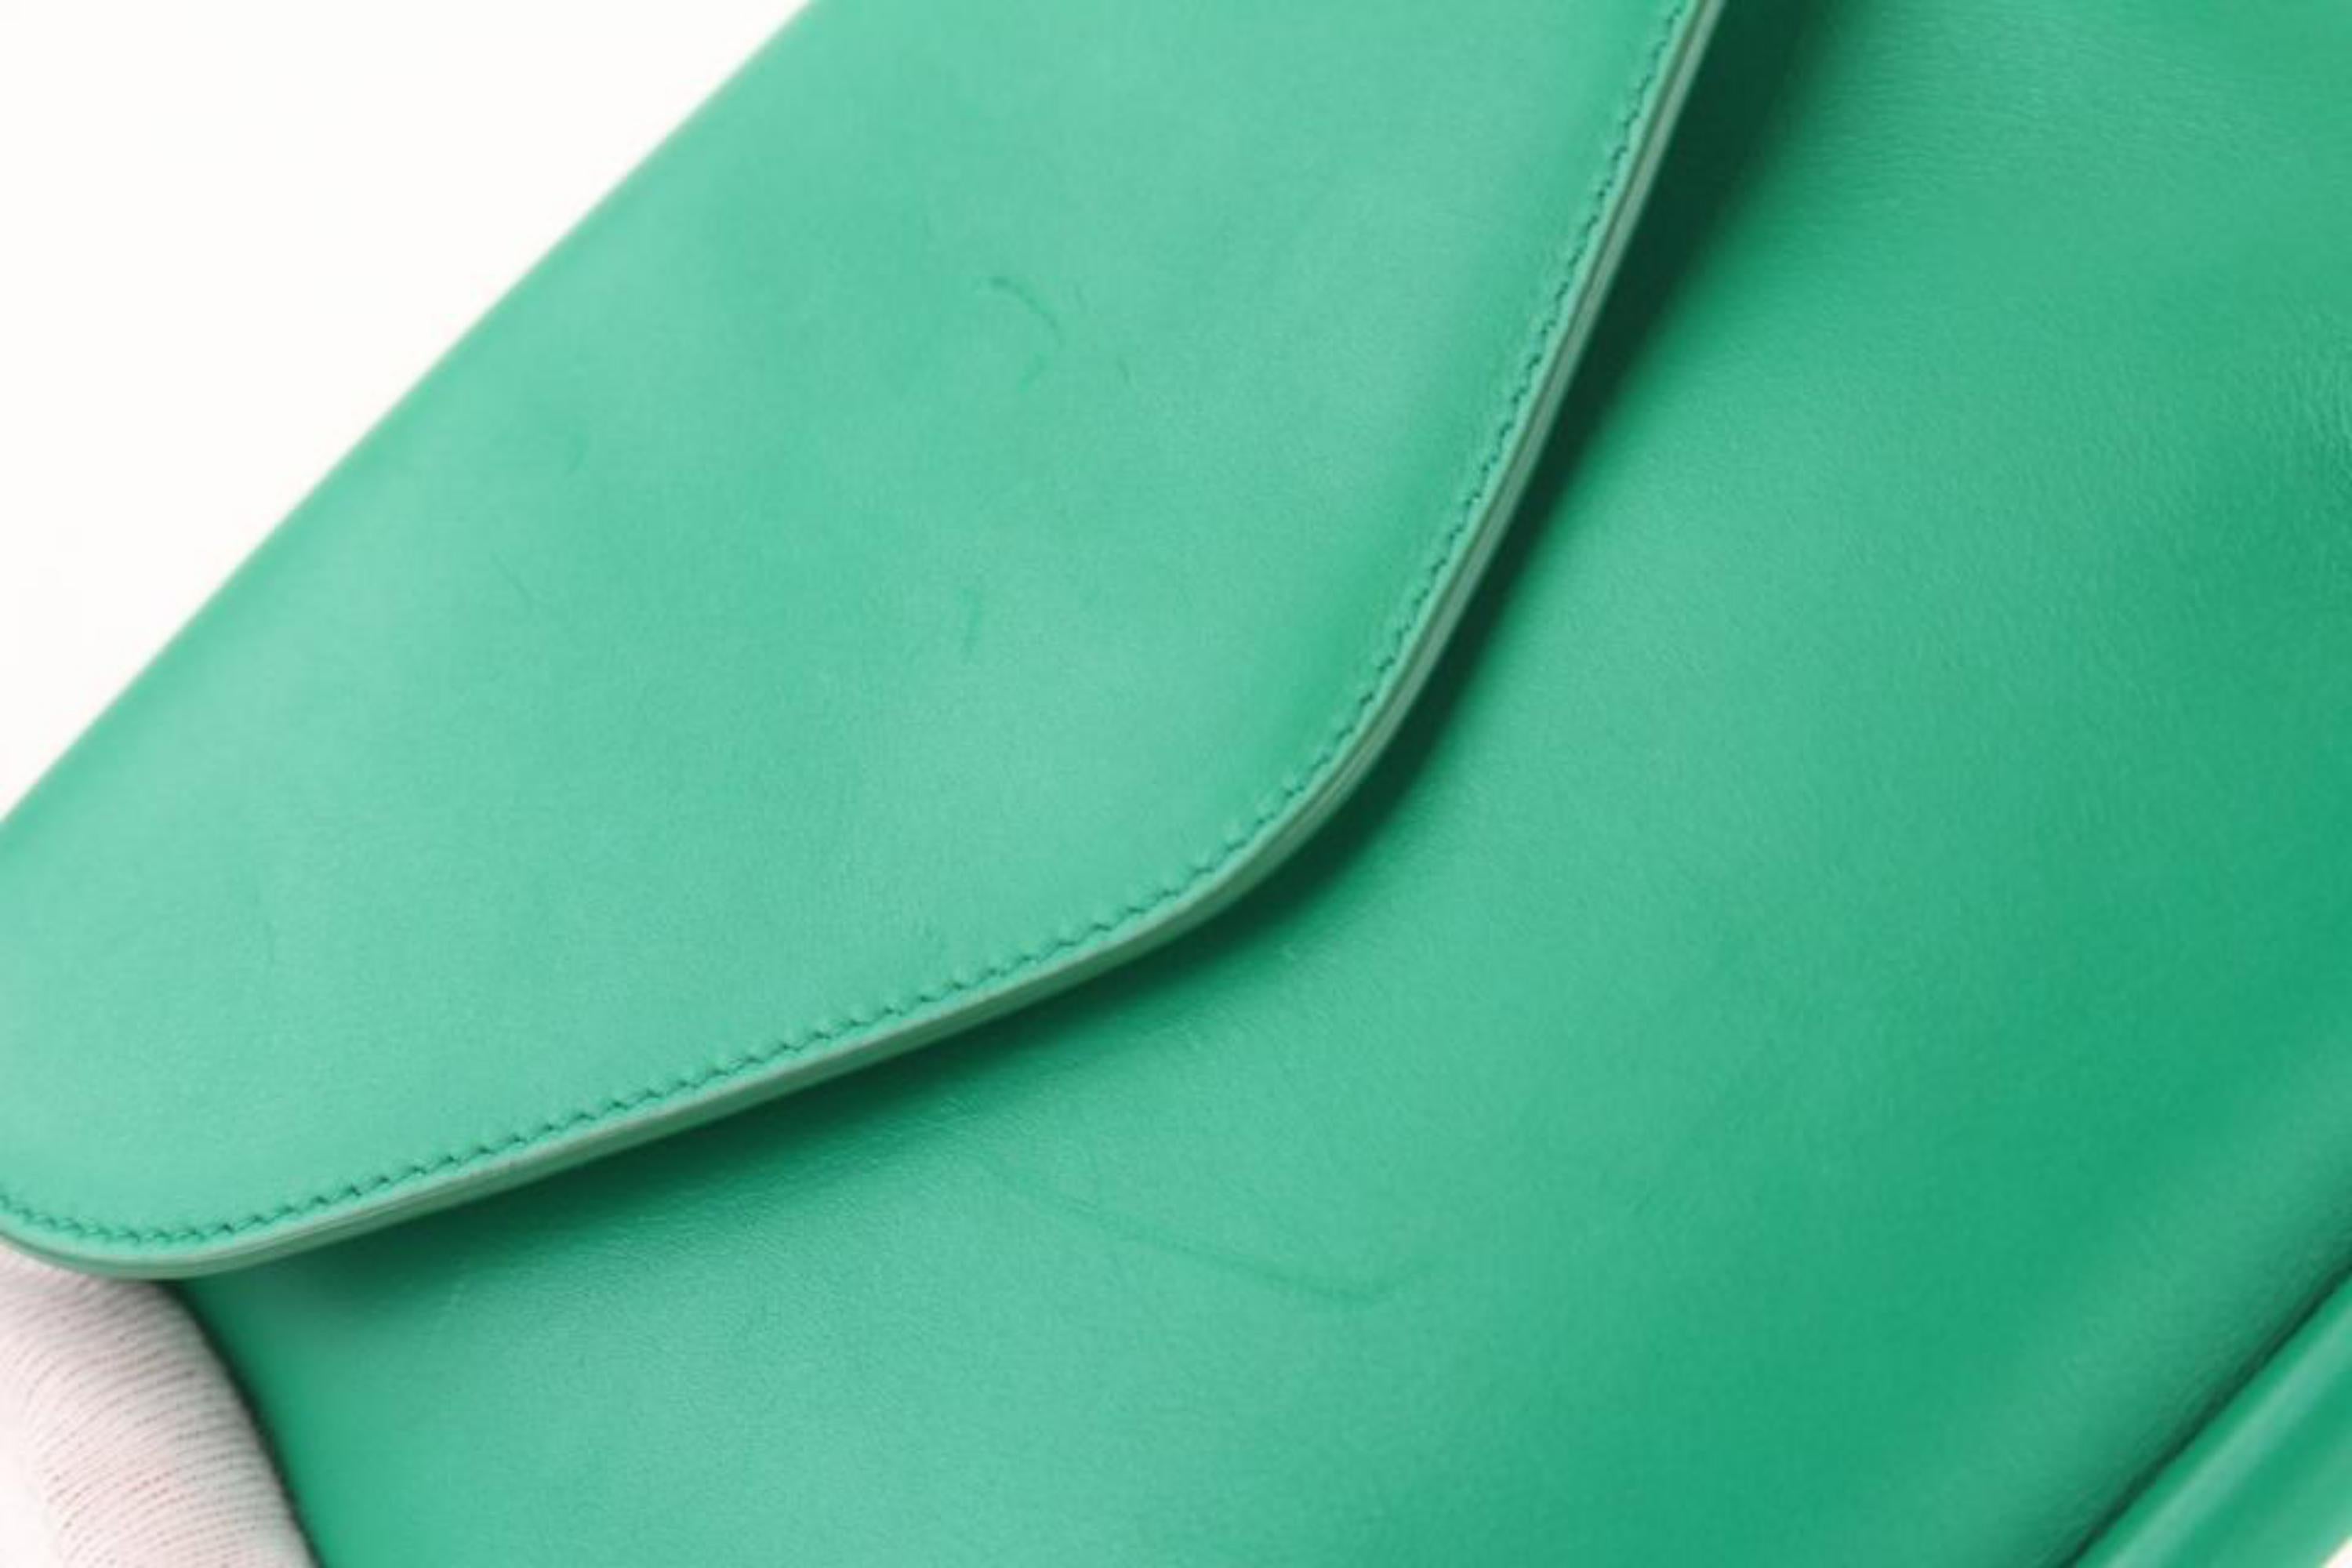 Salvatore Ferragamo Emerald Chain Flap 23mz1102 Green Leather Shoulder Bag For Sale 7